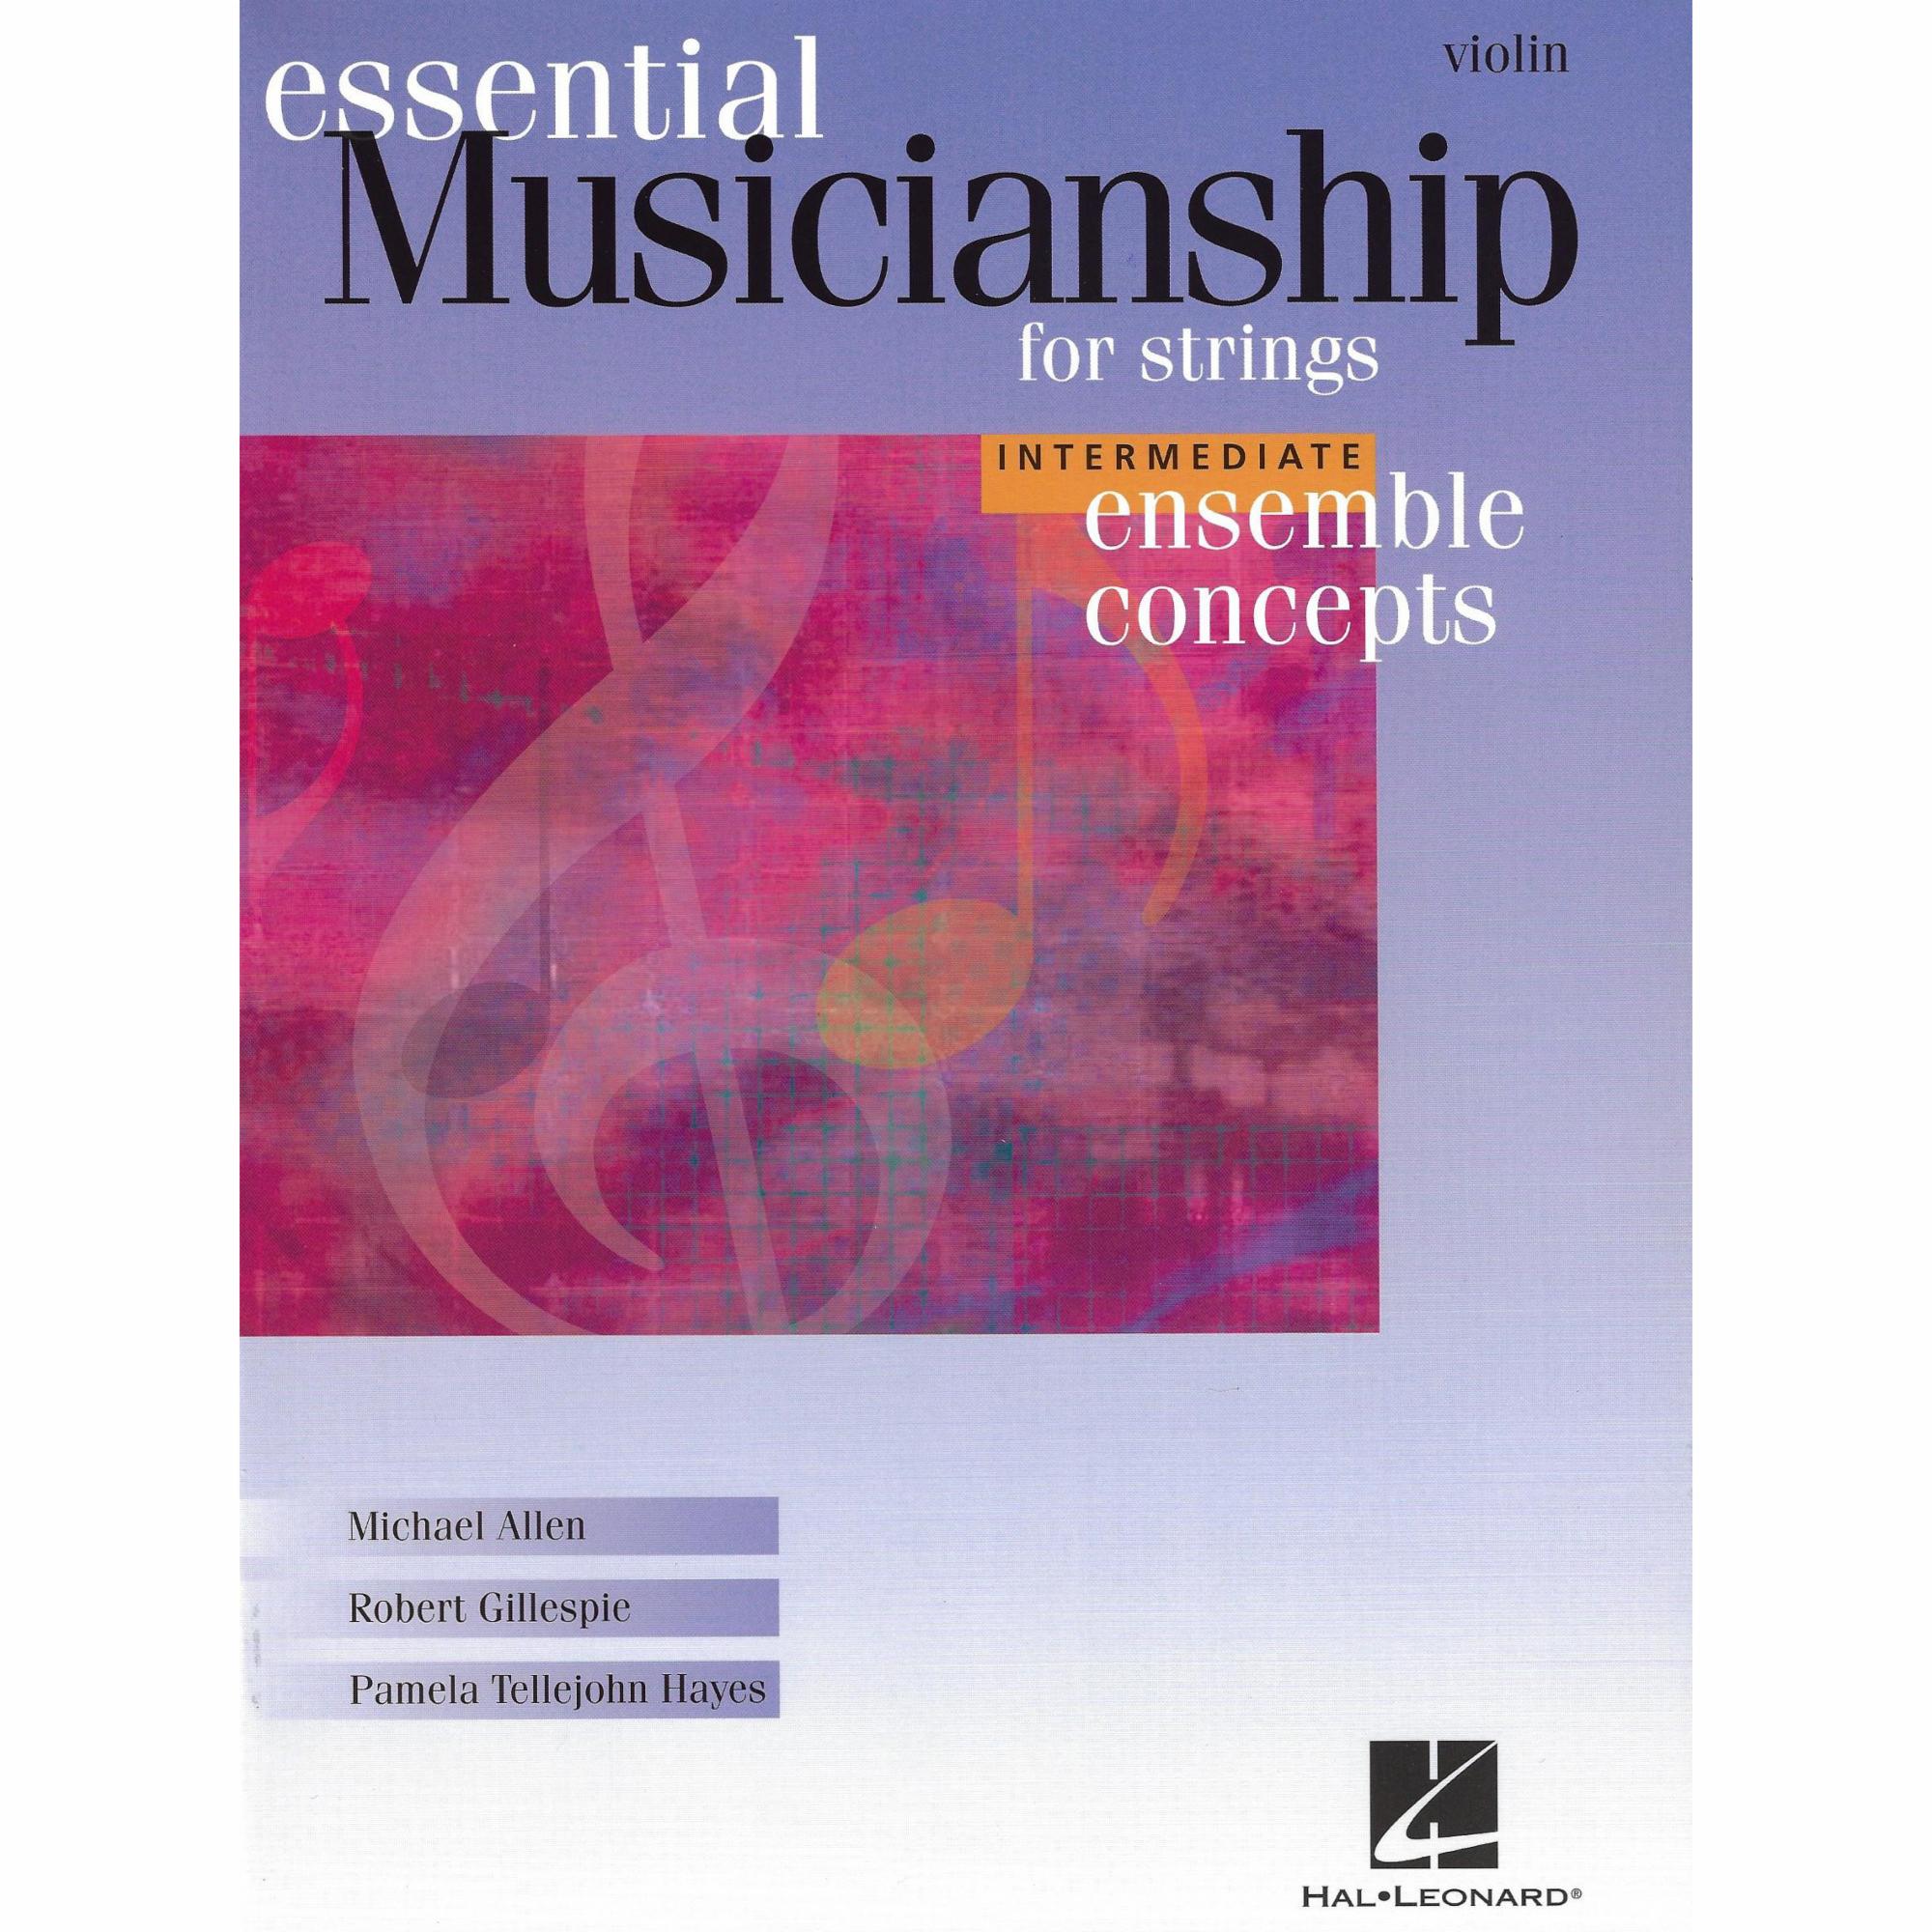 Essential Musicianship for Strings: Intermediate Ensemble Concepts